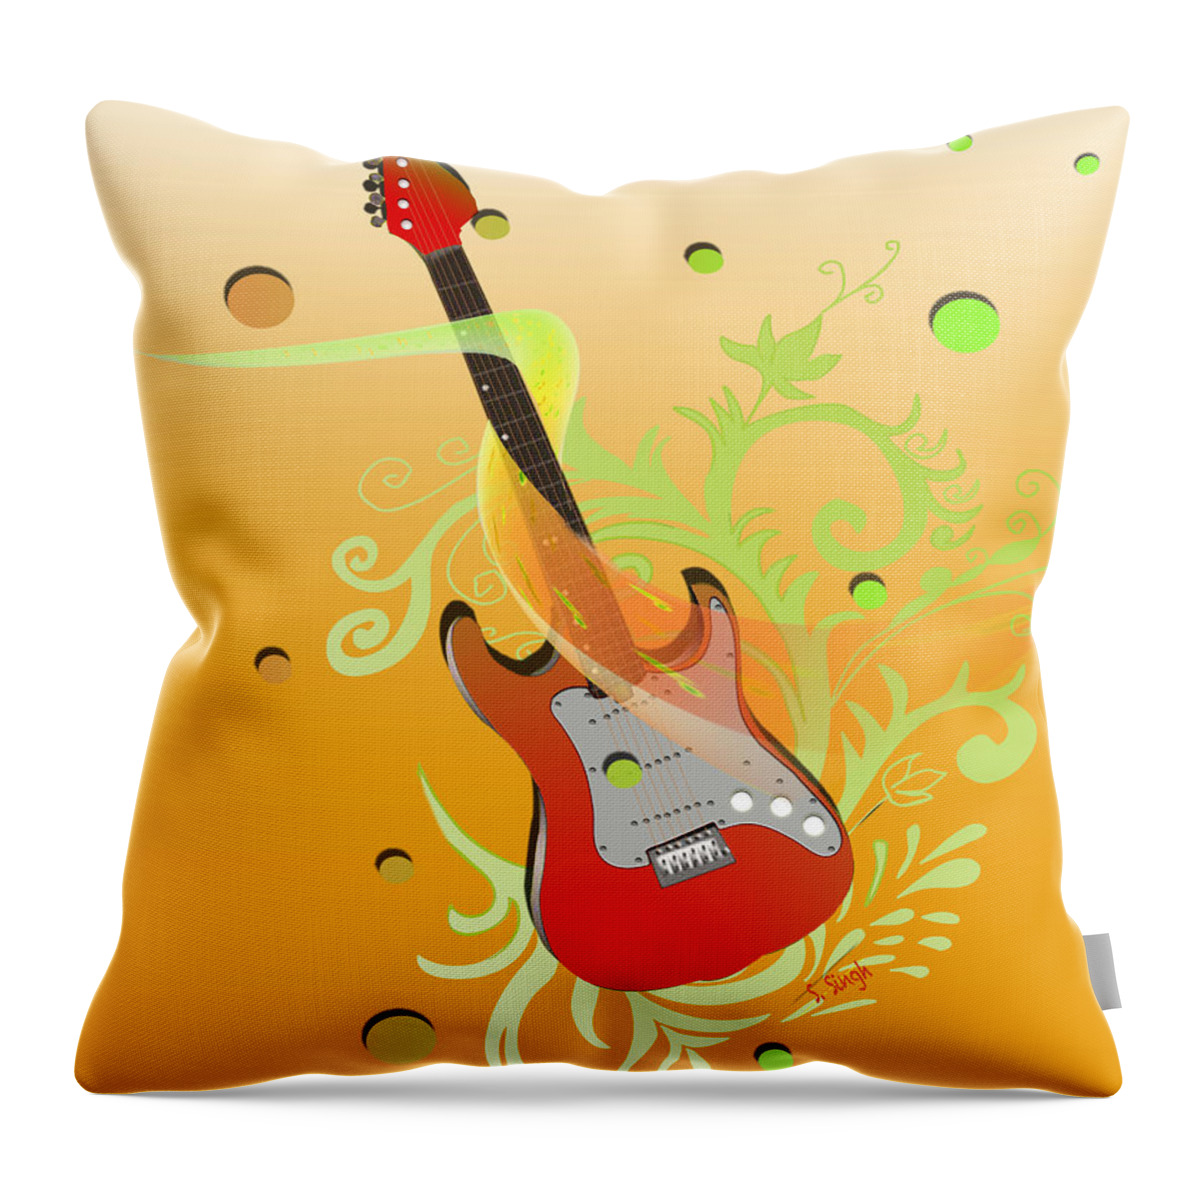 Guitar Throw Pillow featuring the painting Guitar Guitar by Sarabjit Singh